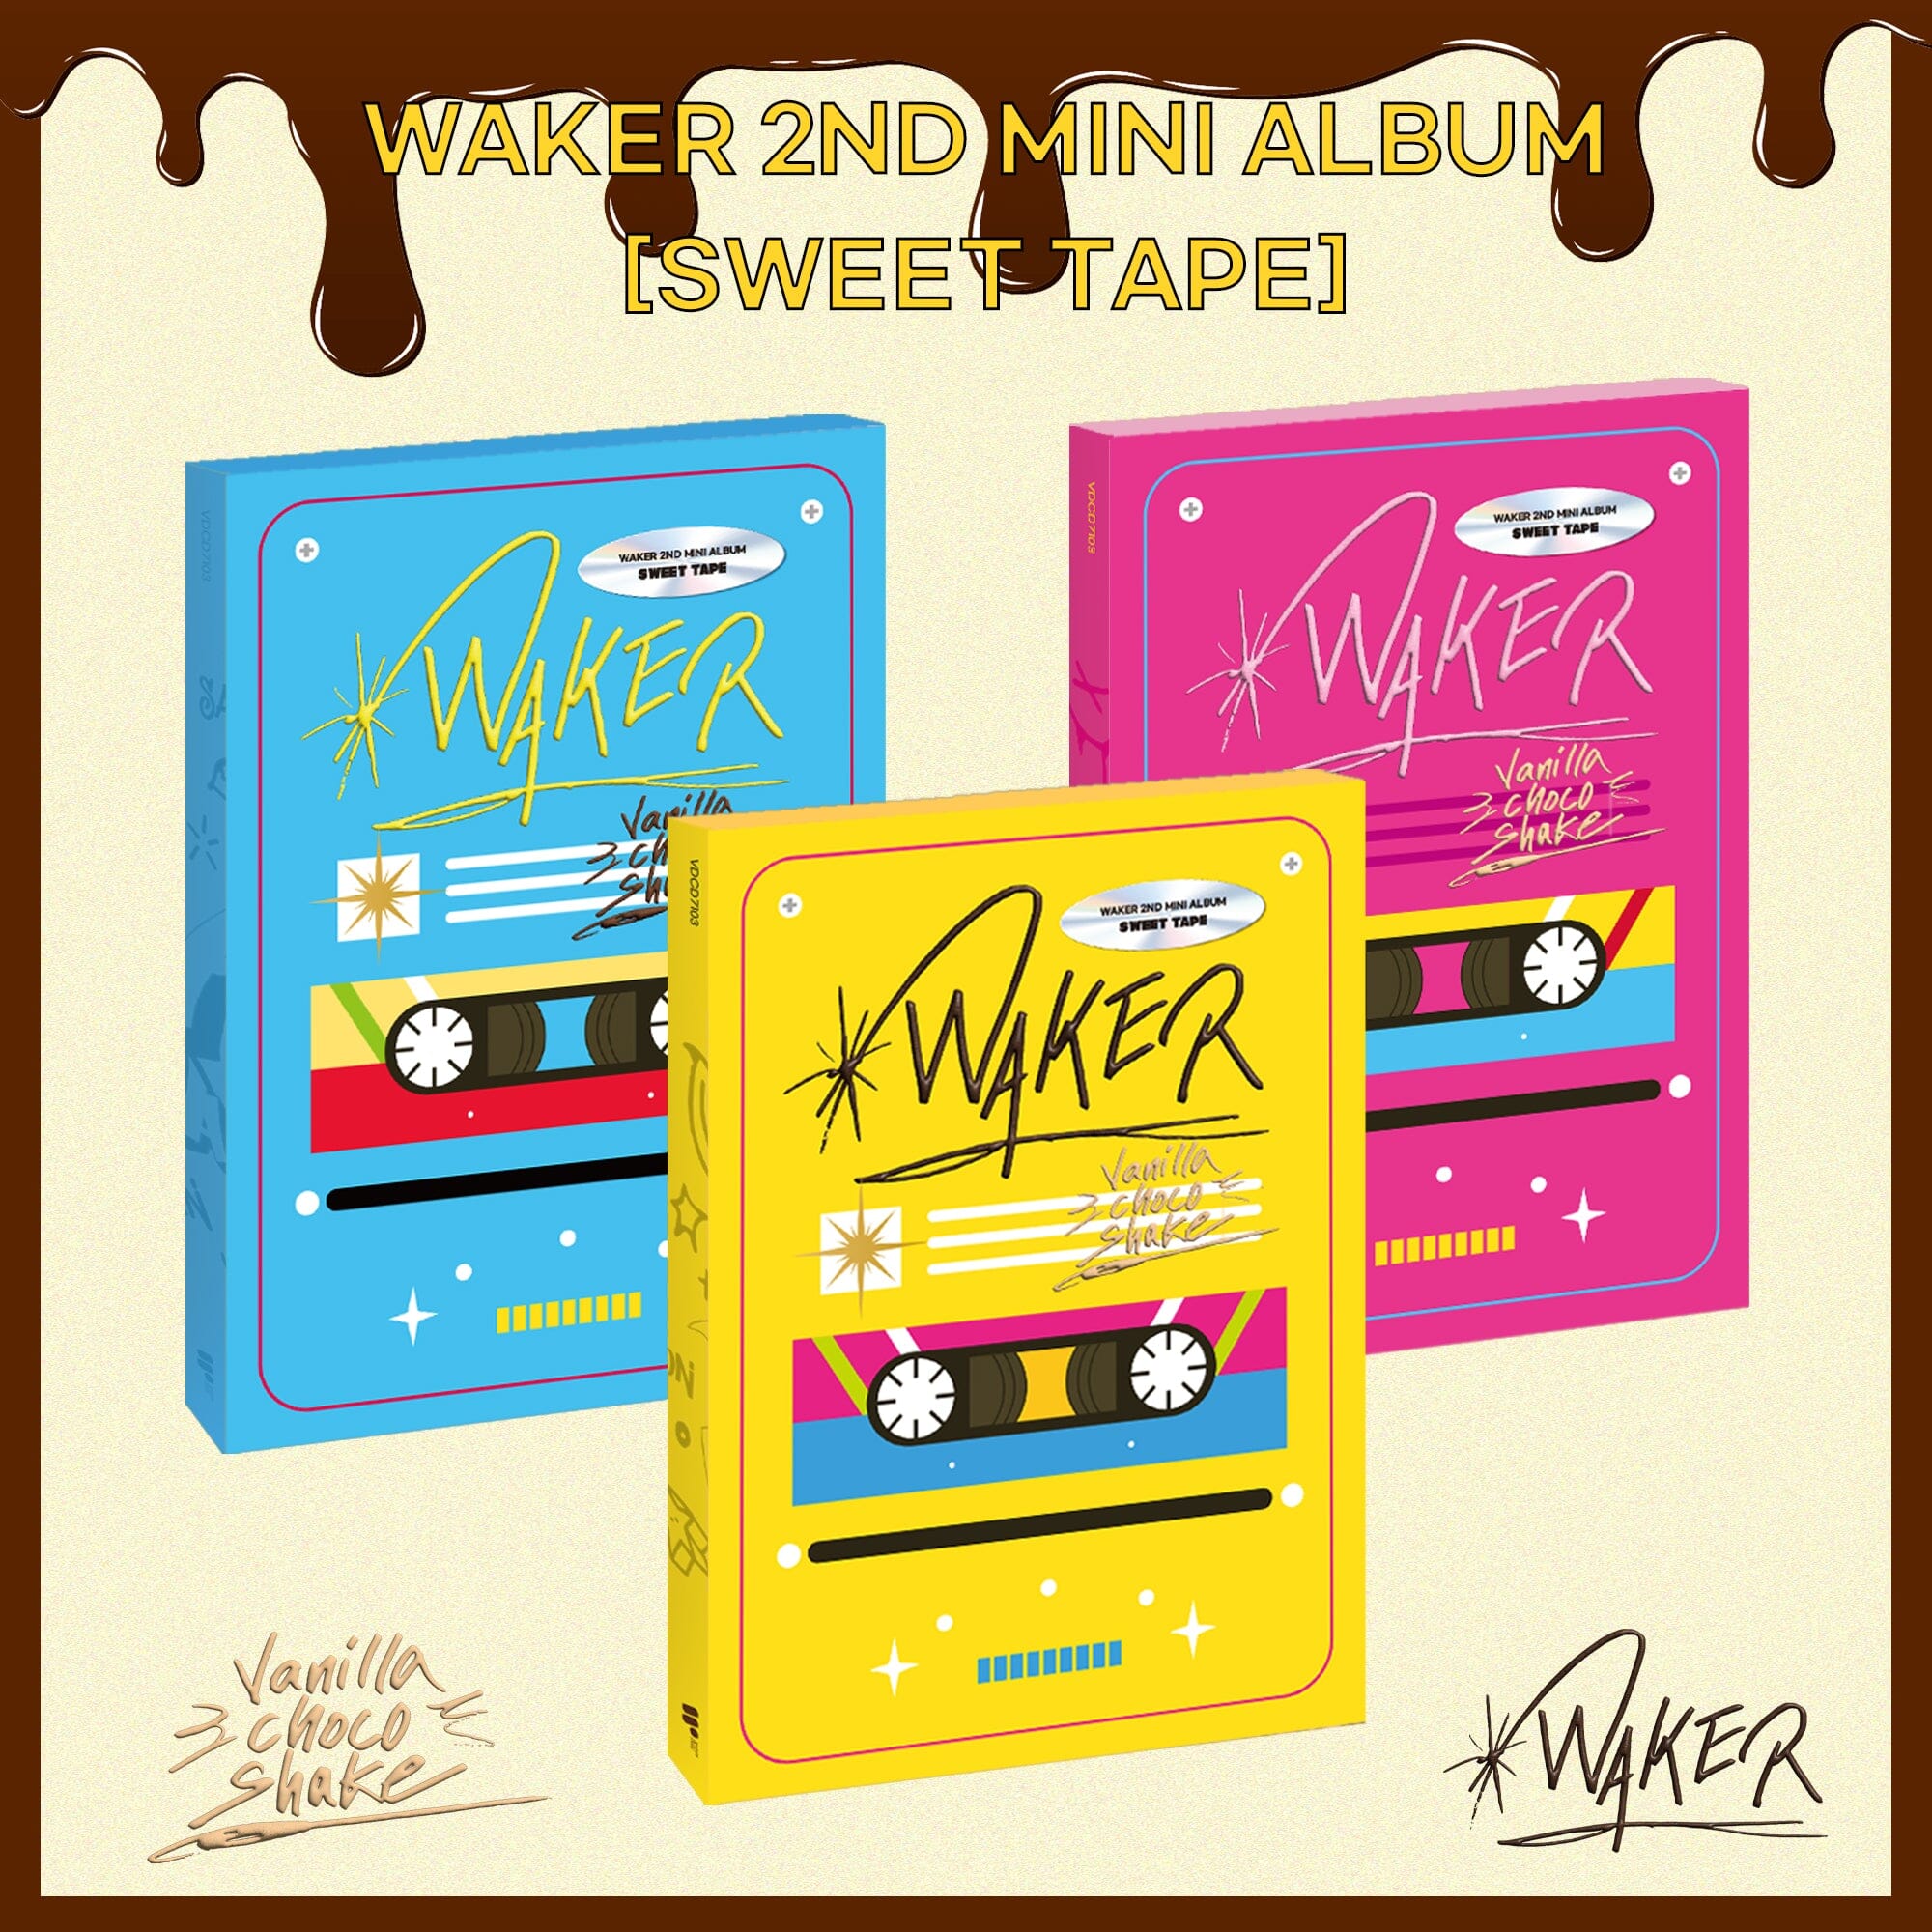 WAKER - SWEET TAPE (2ND MINI ALBUM)